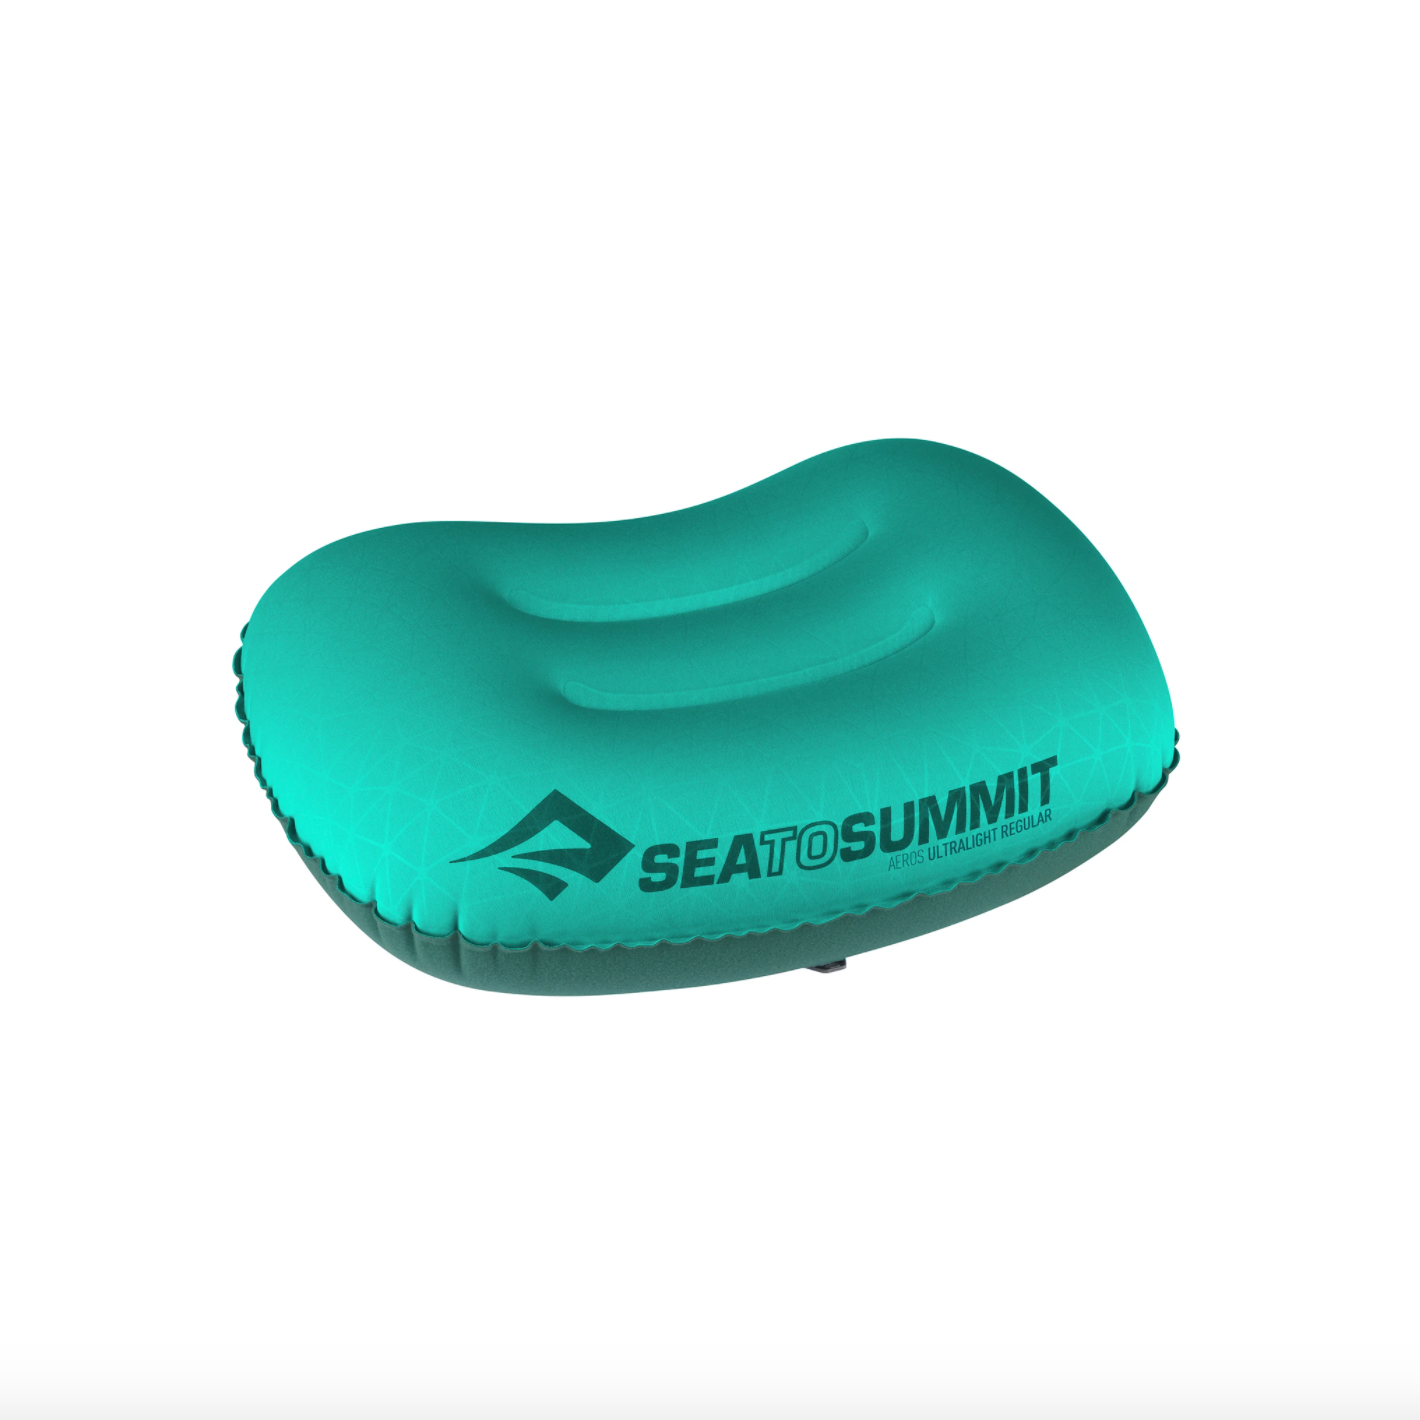 sea to summit aeros ultralight pillow in teal